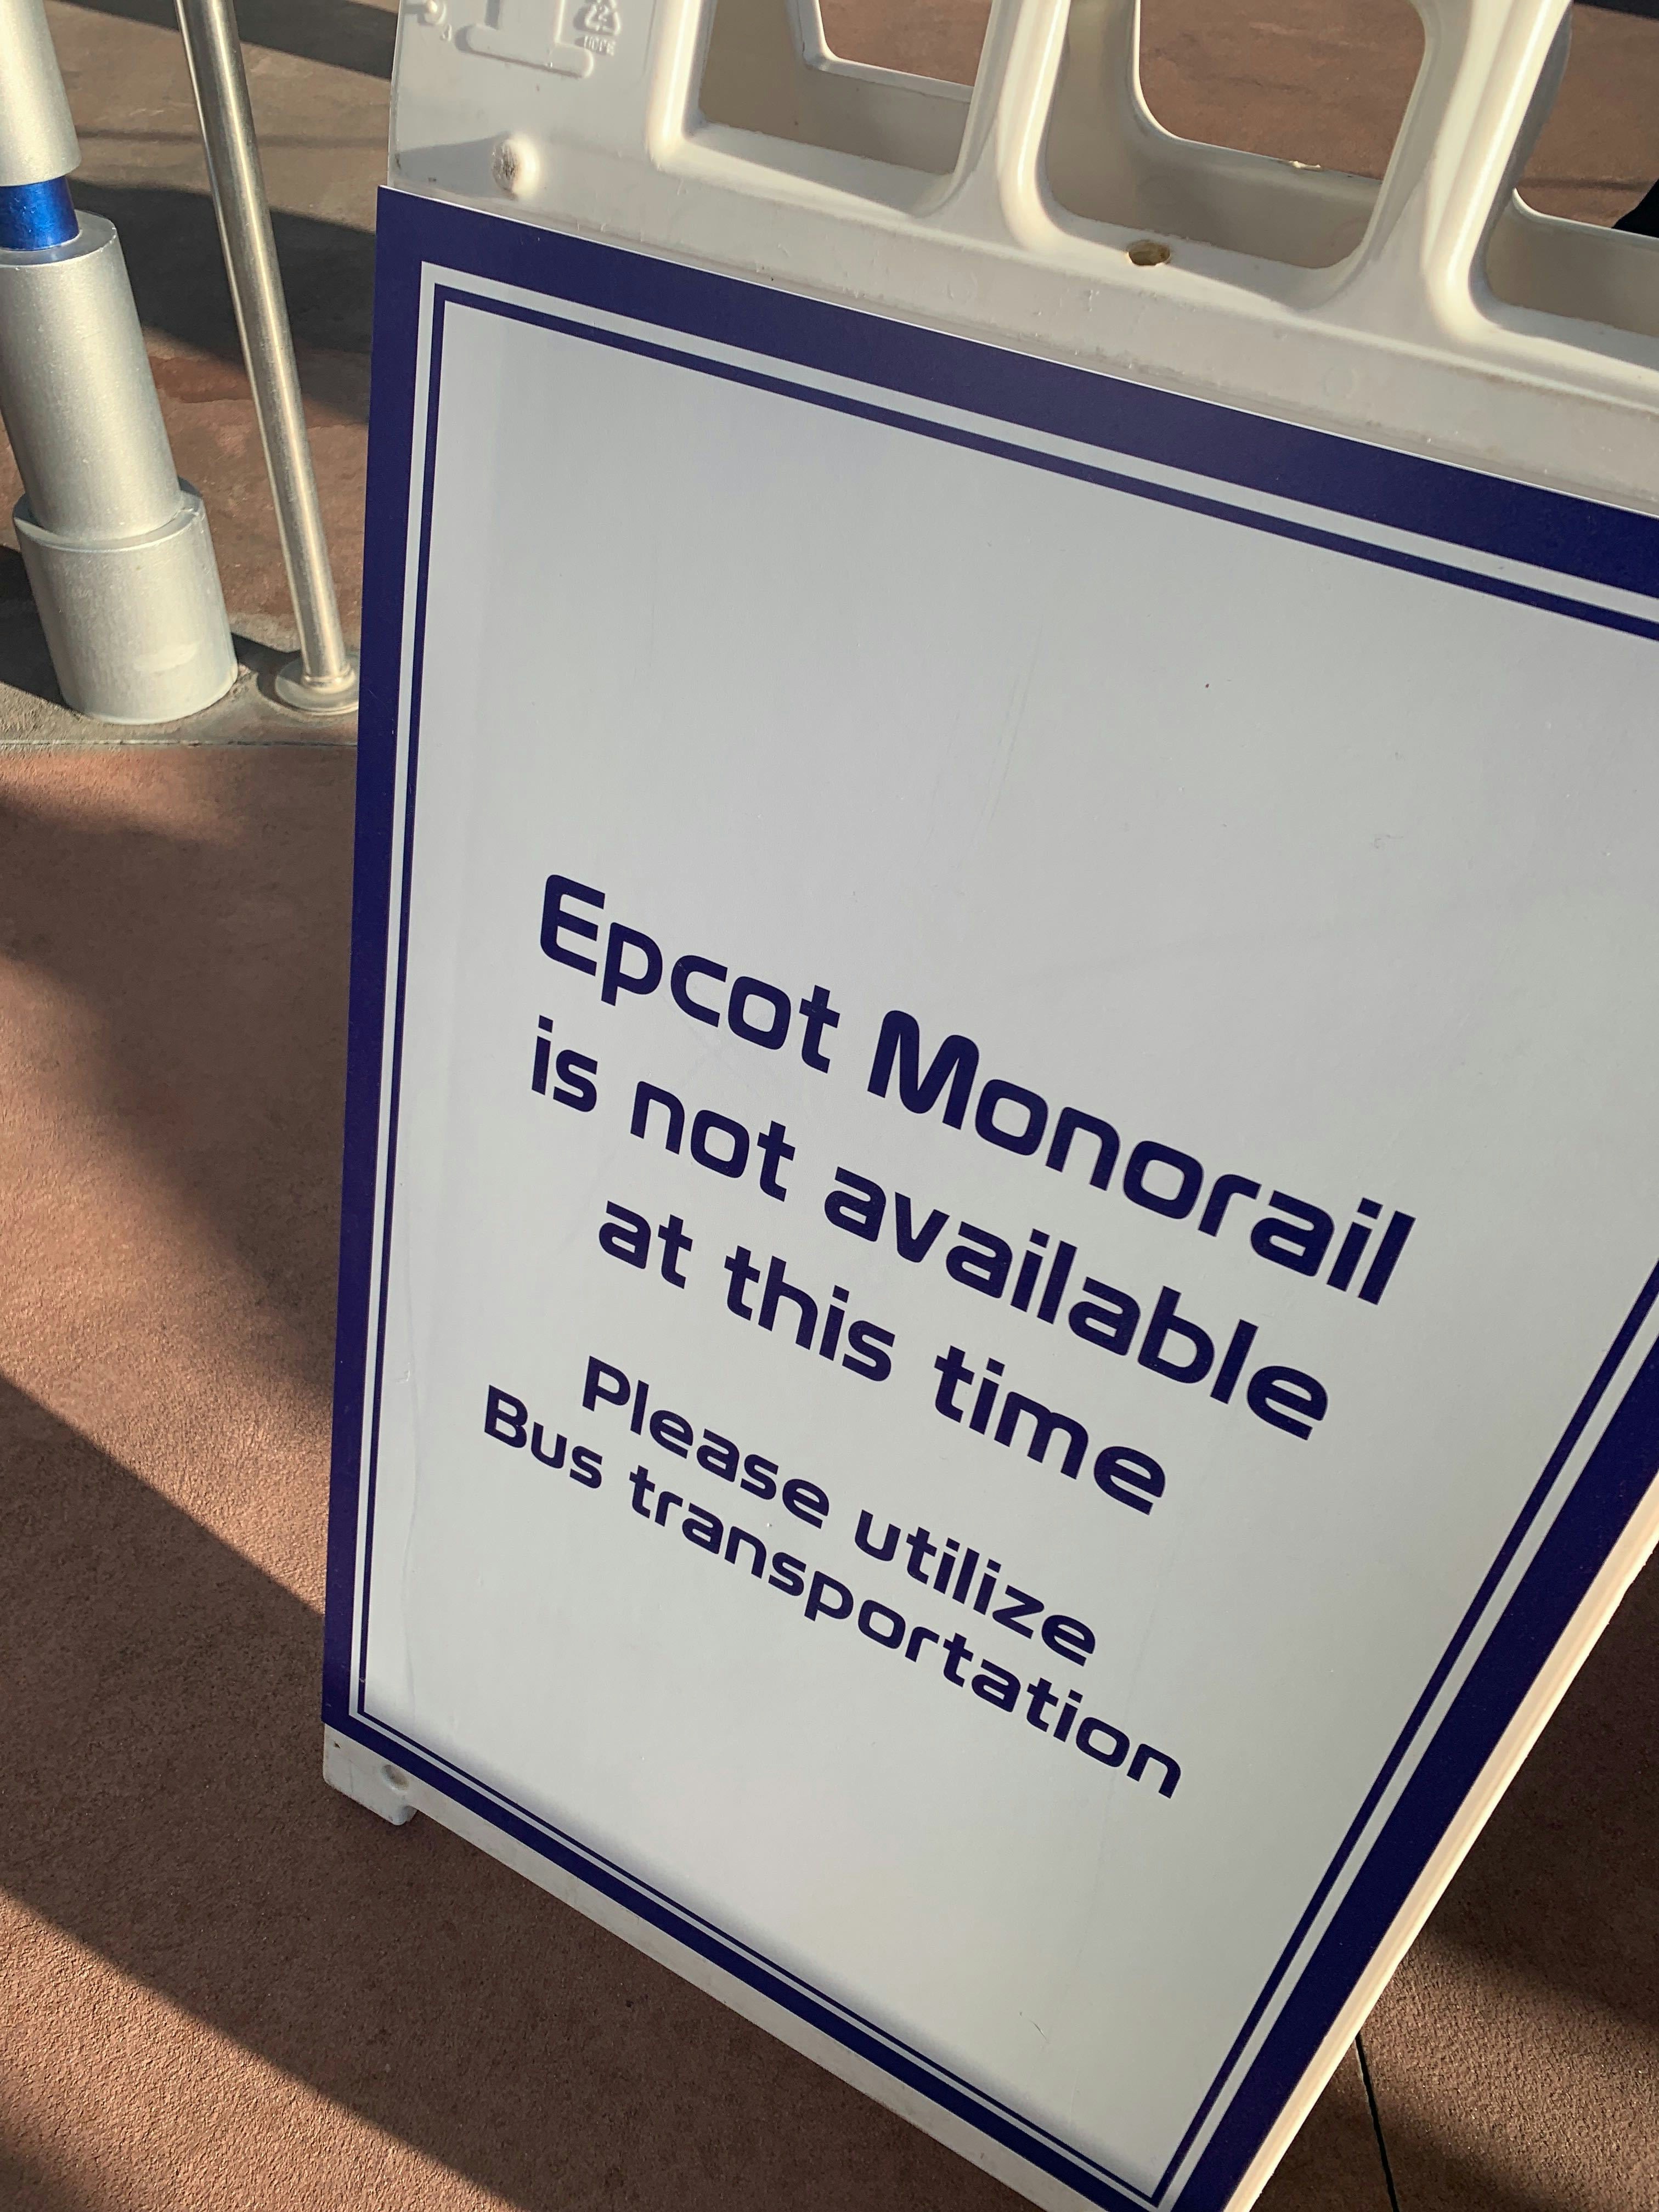 monorail epcot construction jan 2020 8.jpg?auto=compress%2Cformat&ixlib=php 1.2